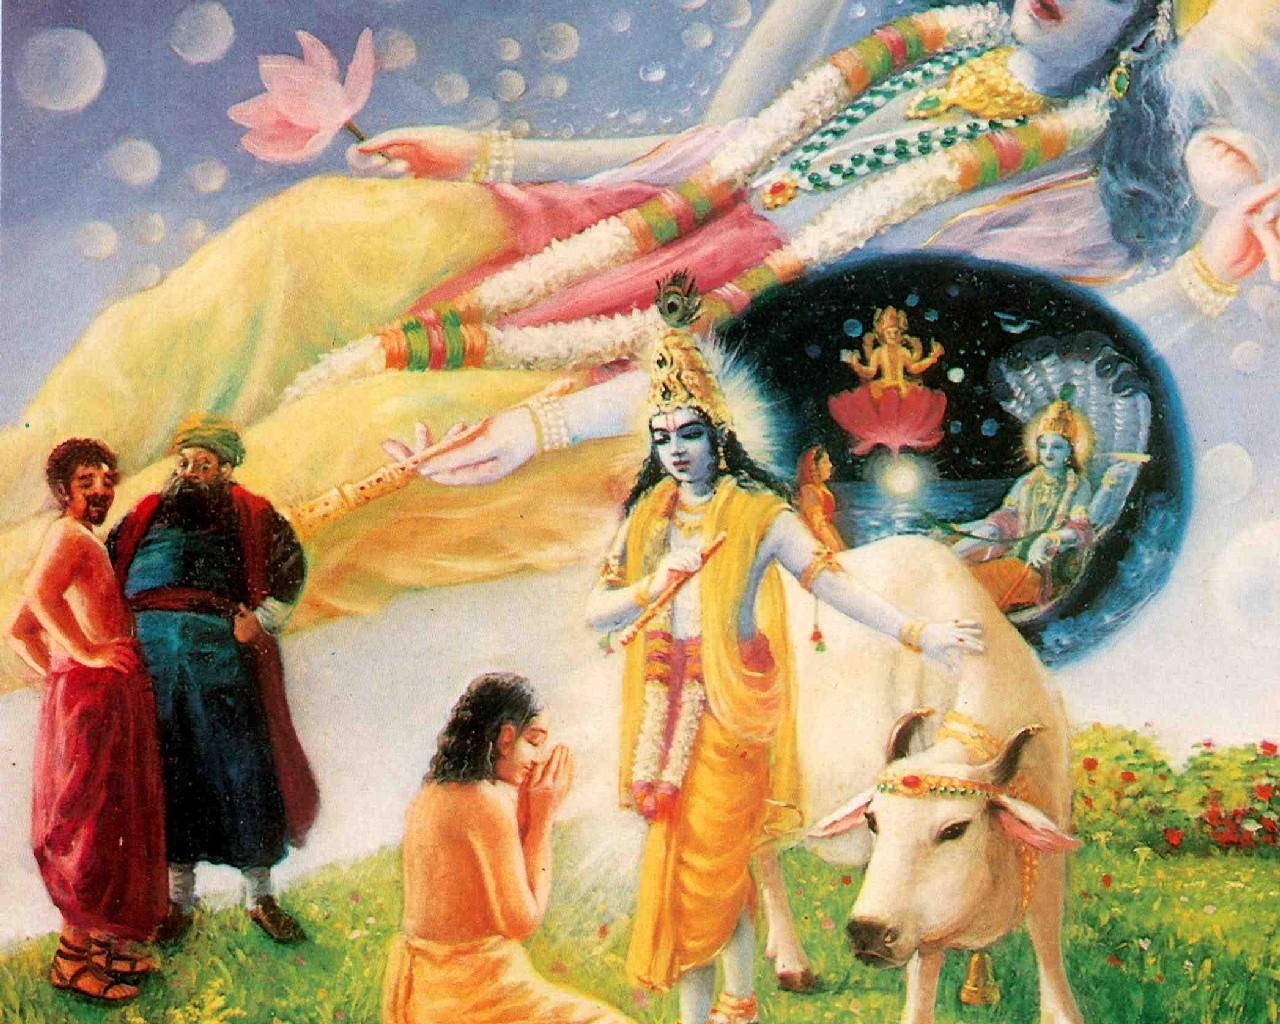 Caption: Divine Scene Of Bhagavad Gita With Lord Vishnu